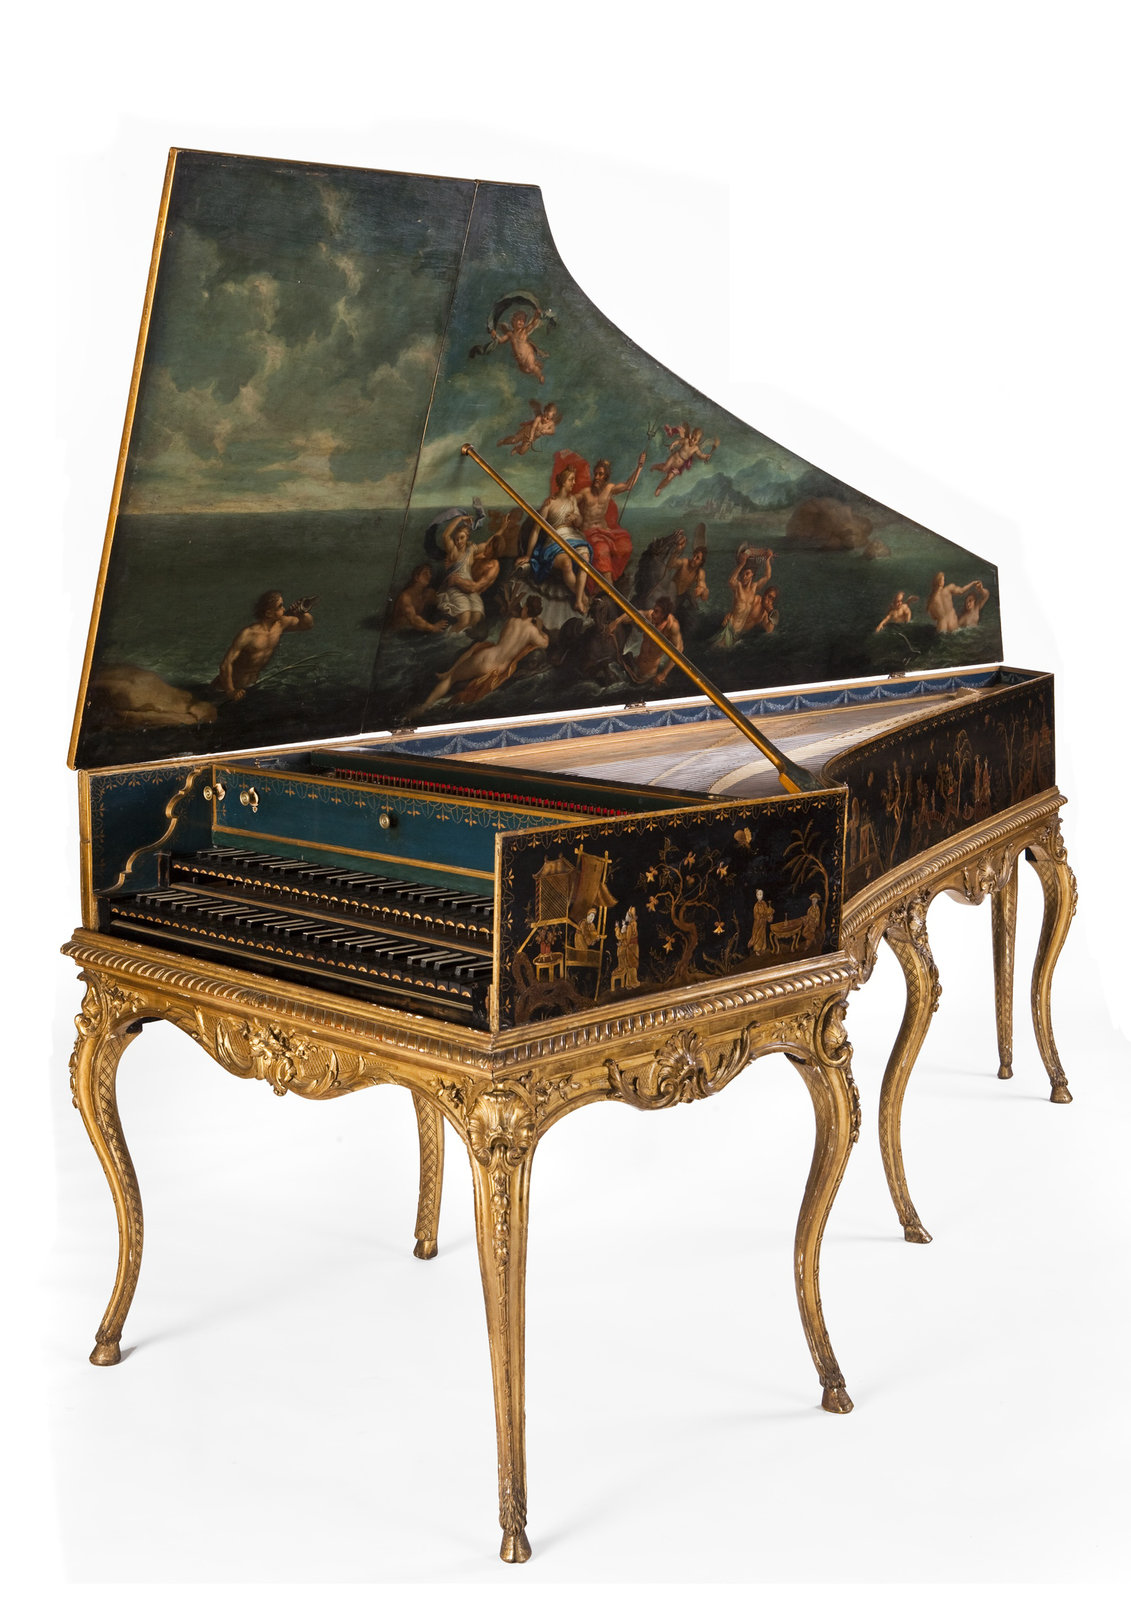  Harpsichord